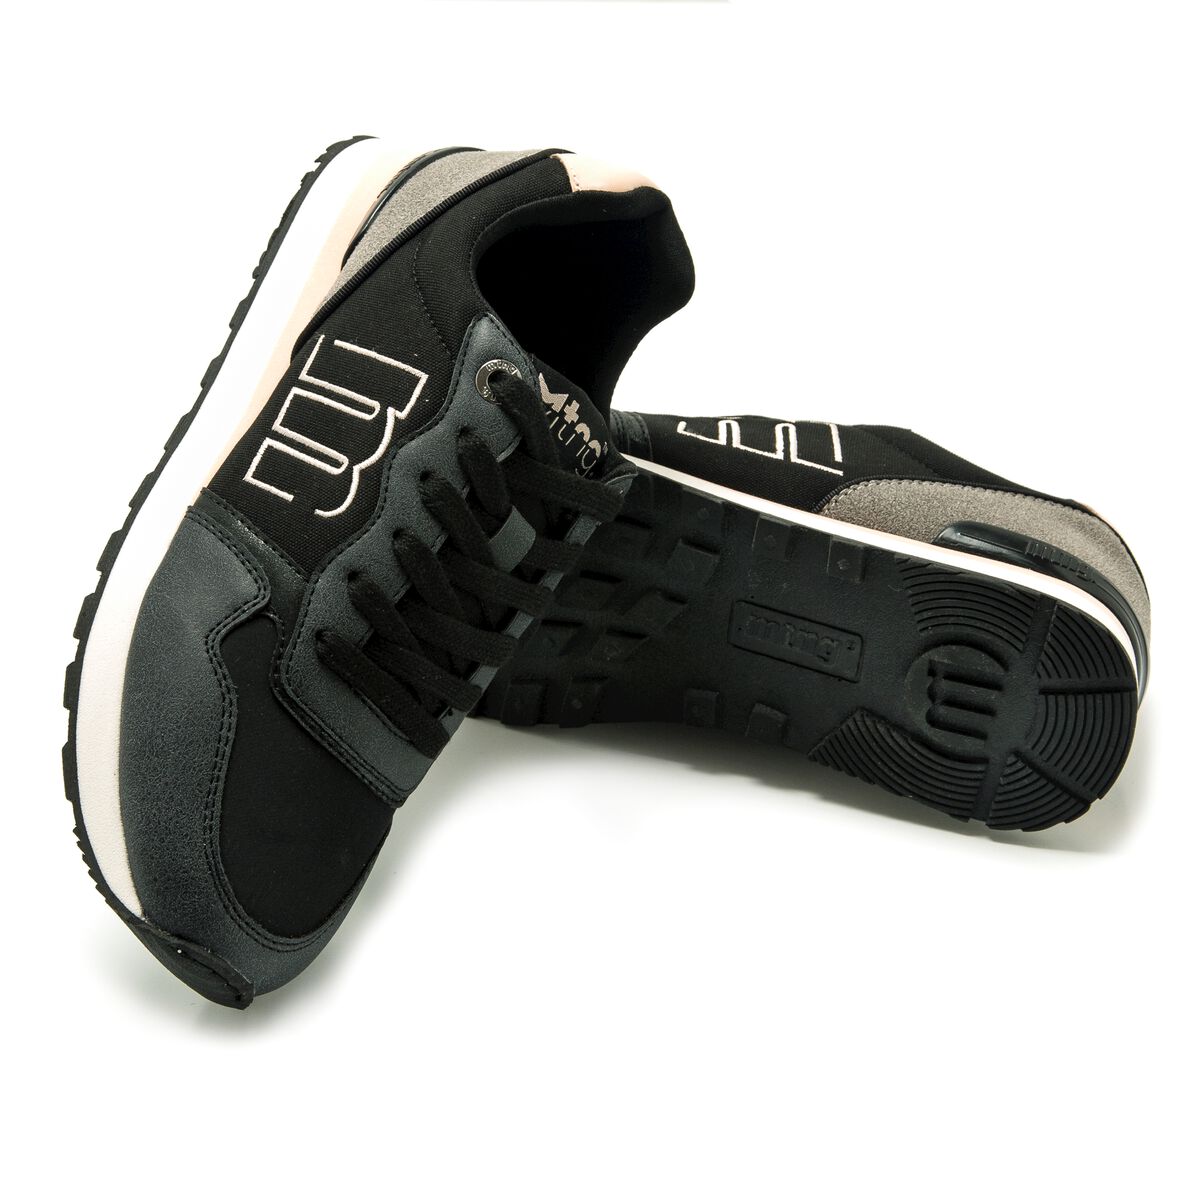 Sneakers de Mulher modelo JOGGO CLASSIC de MTNG image number 4